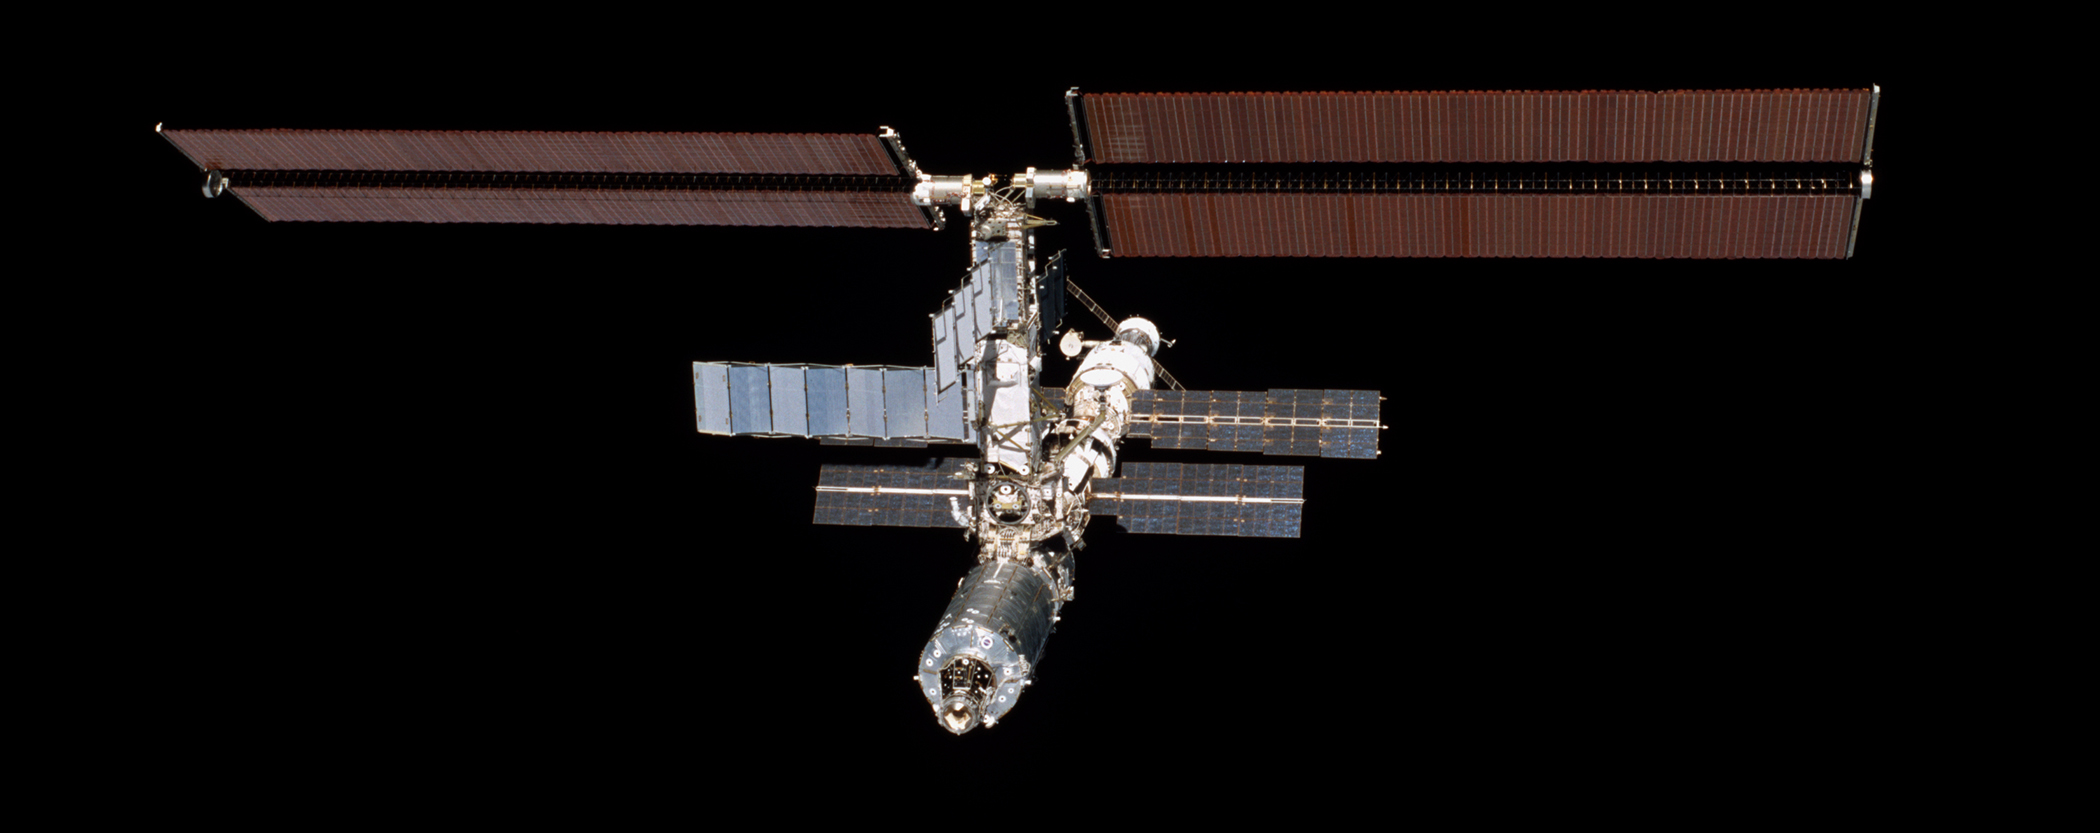 NASA International Space Stationl